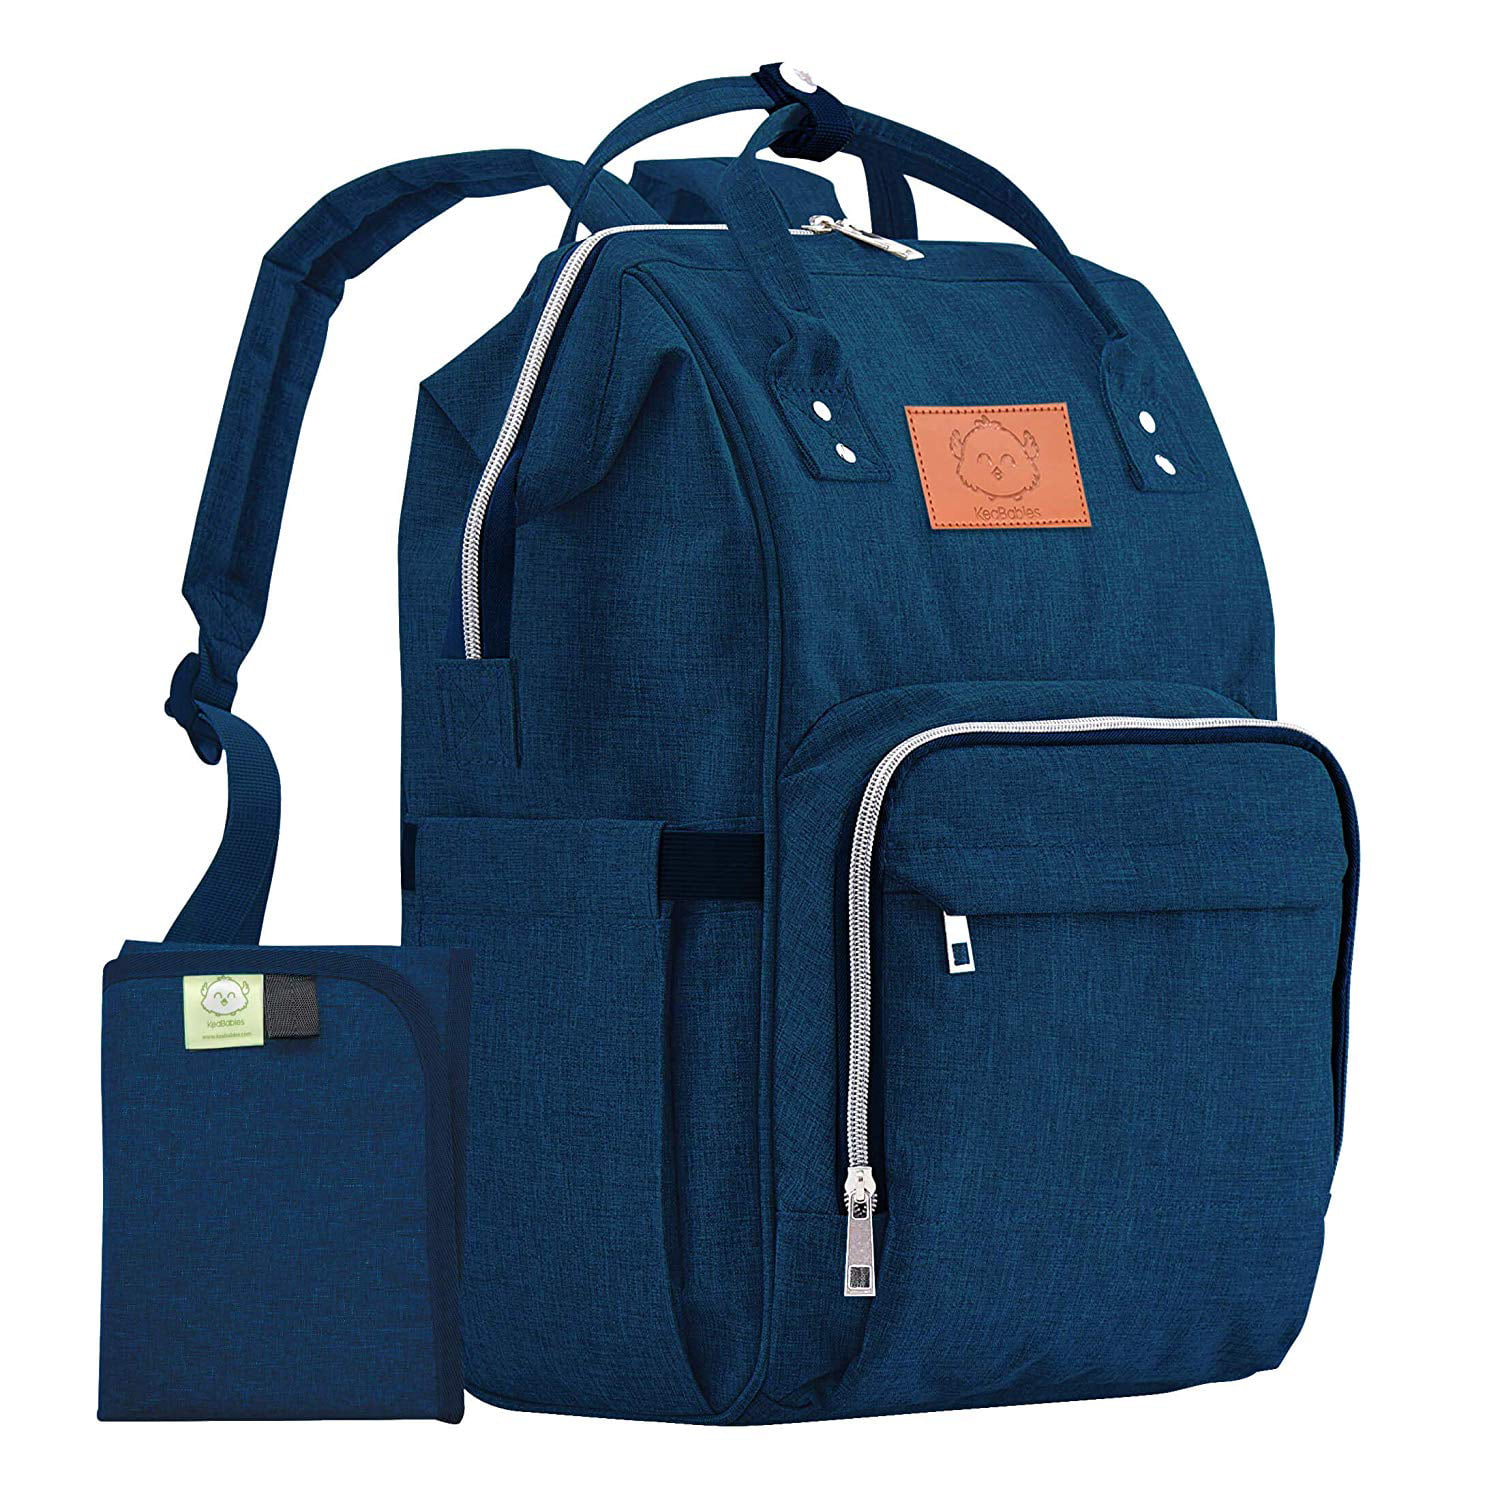 Diaper Bag Backpack Large - Multi-Function Waterproof Baby Travel Bags for Mom, Dad, Men, Women ...